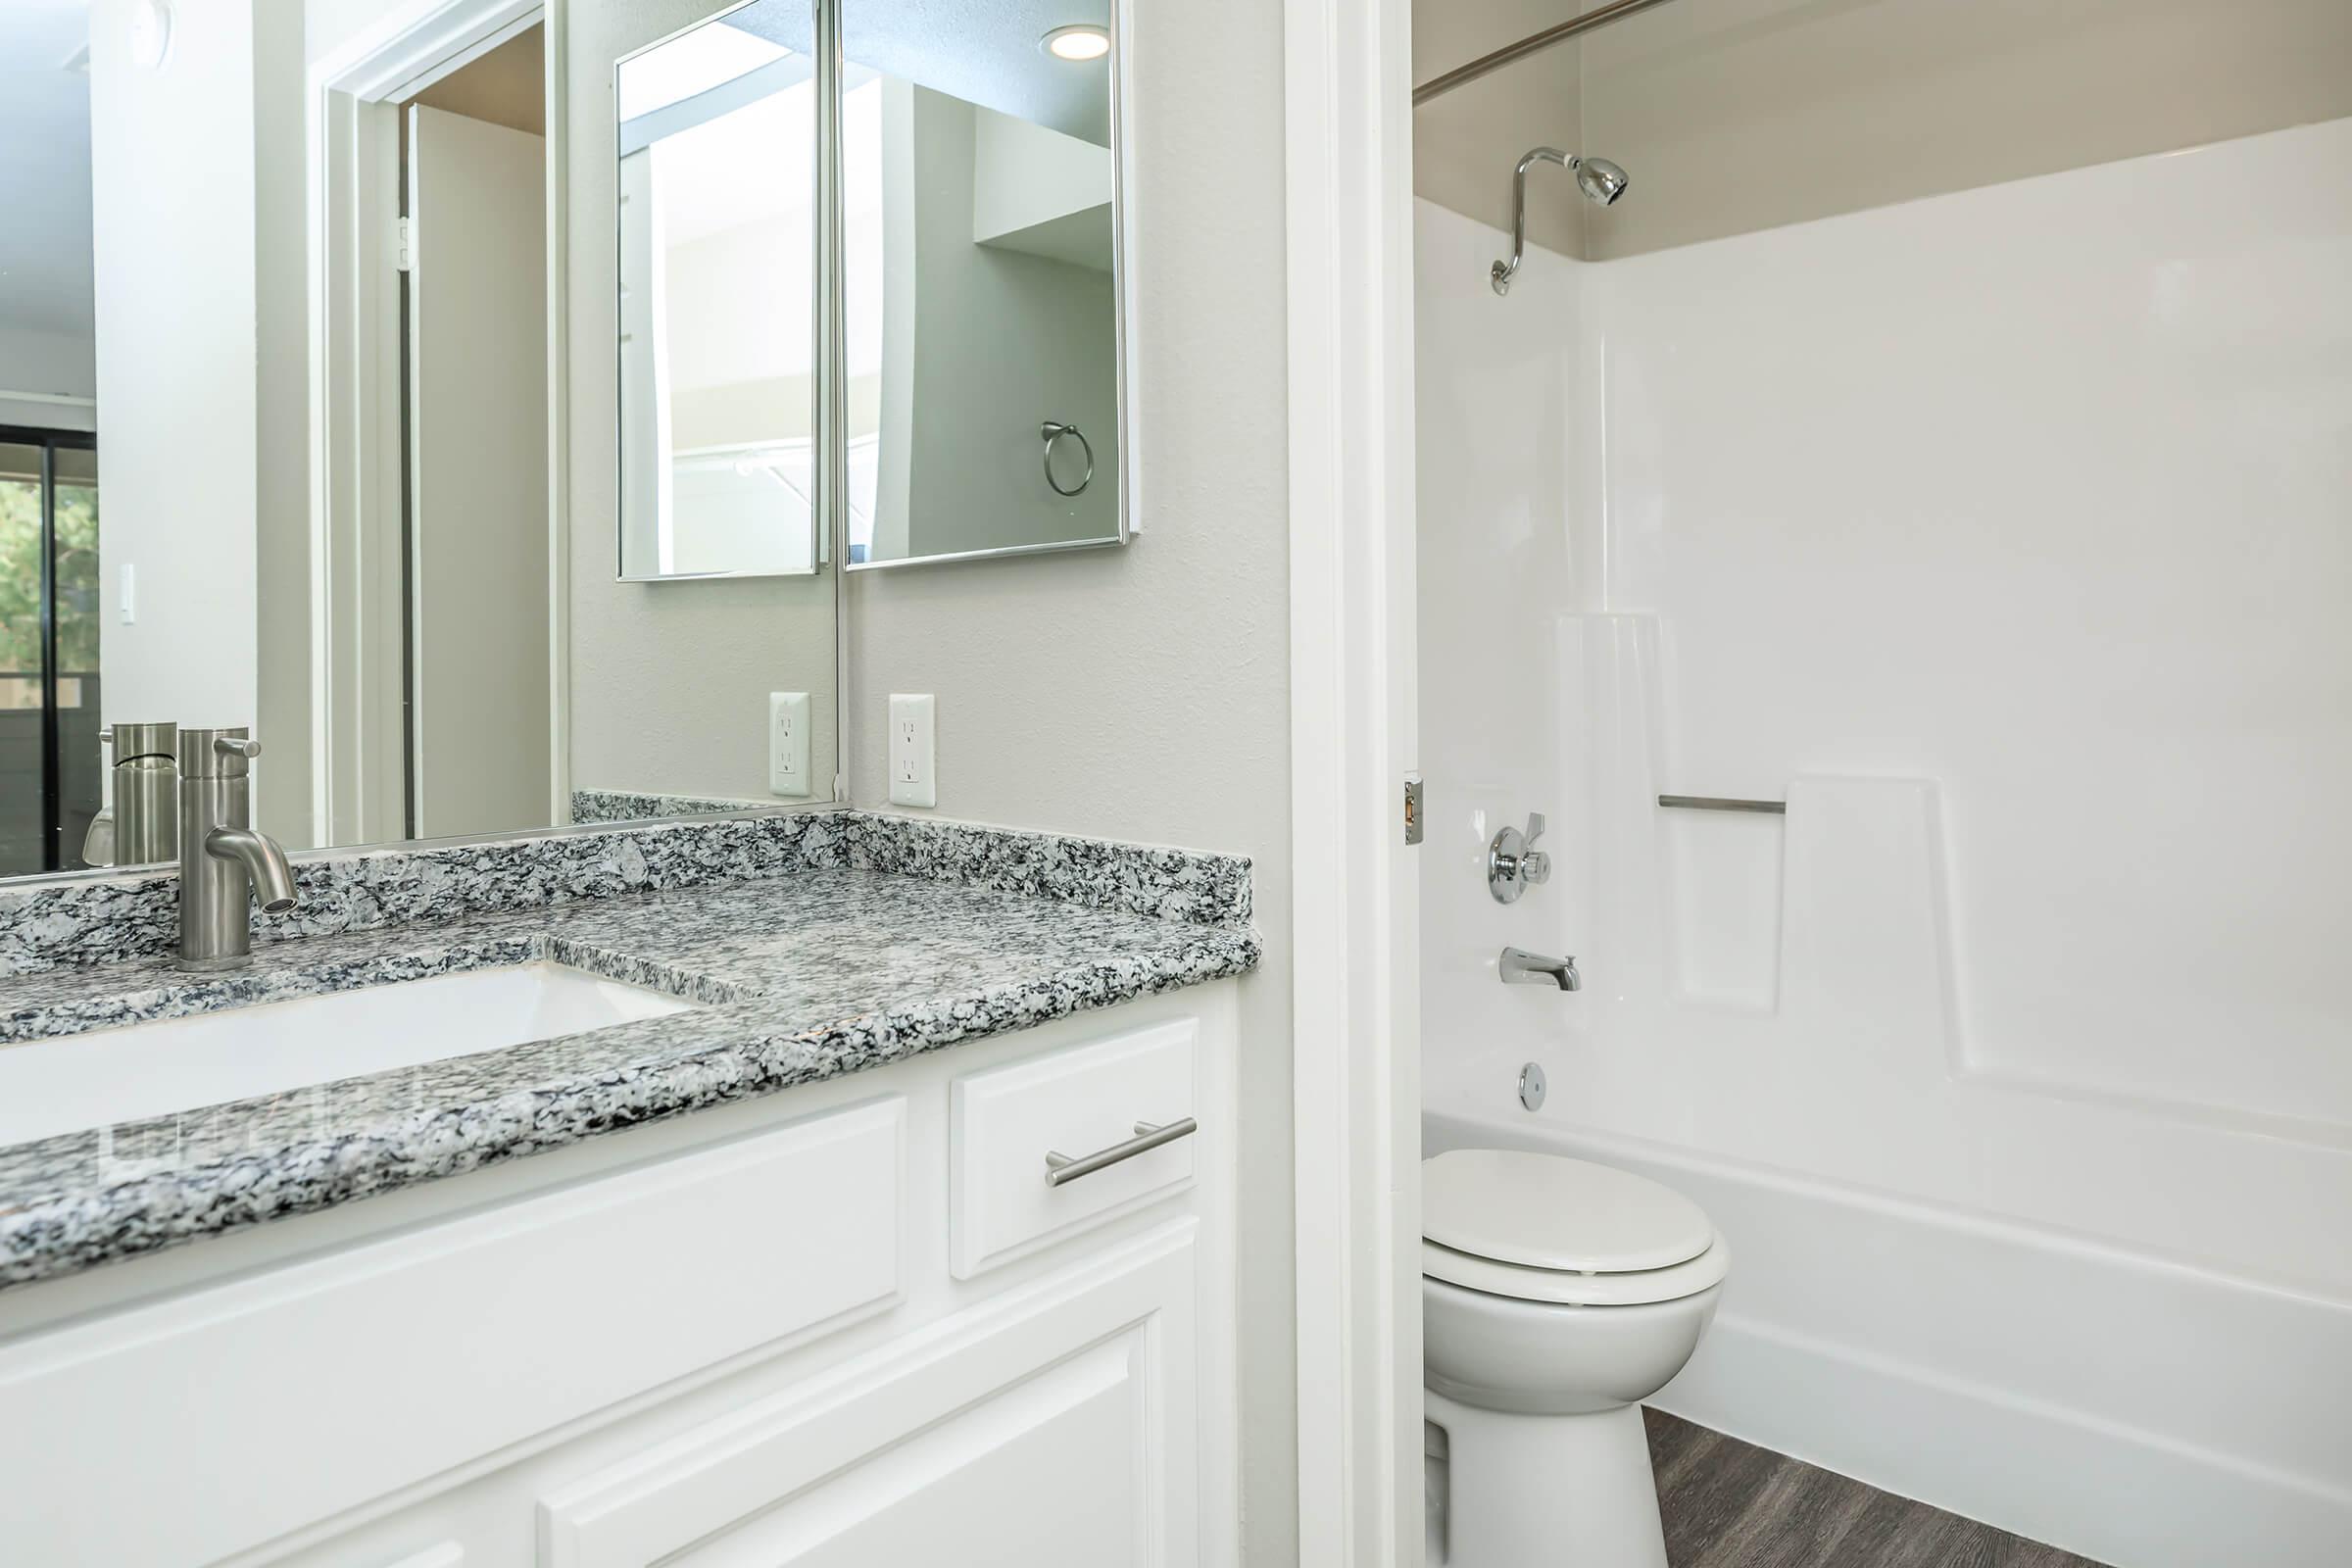 Bathroom with granite countertops